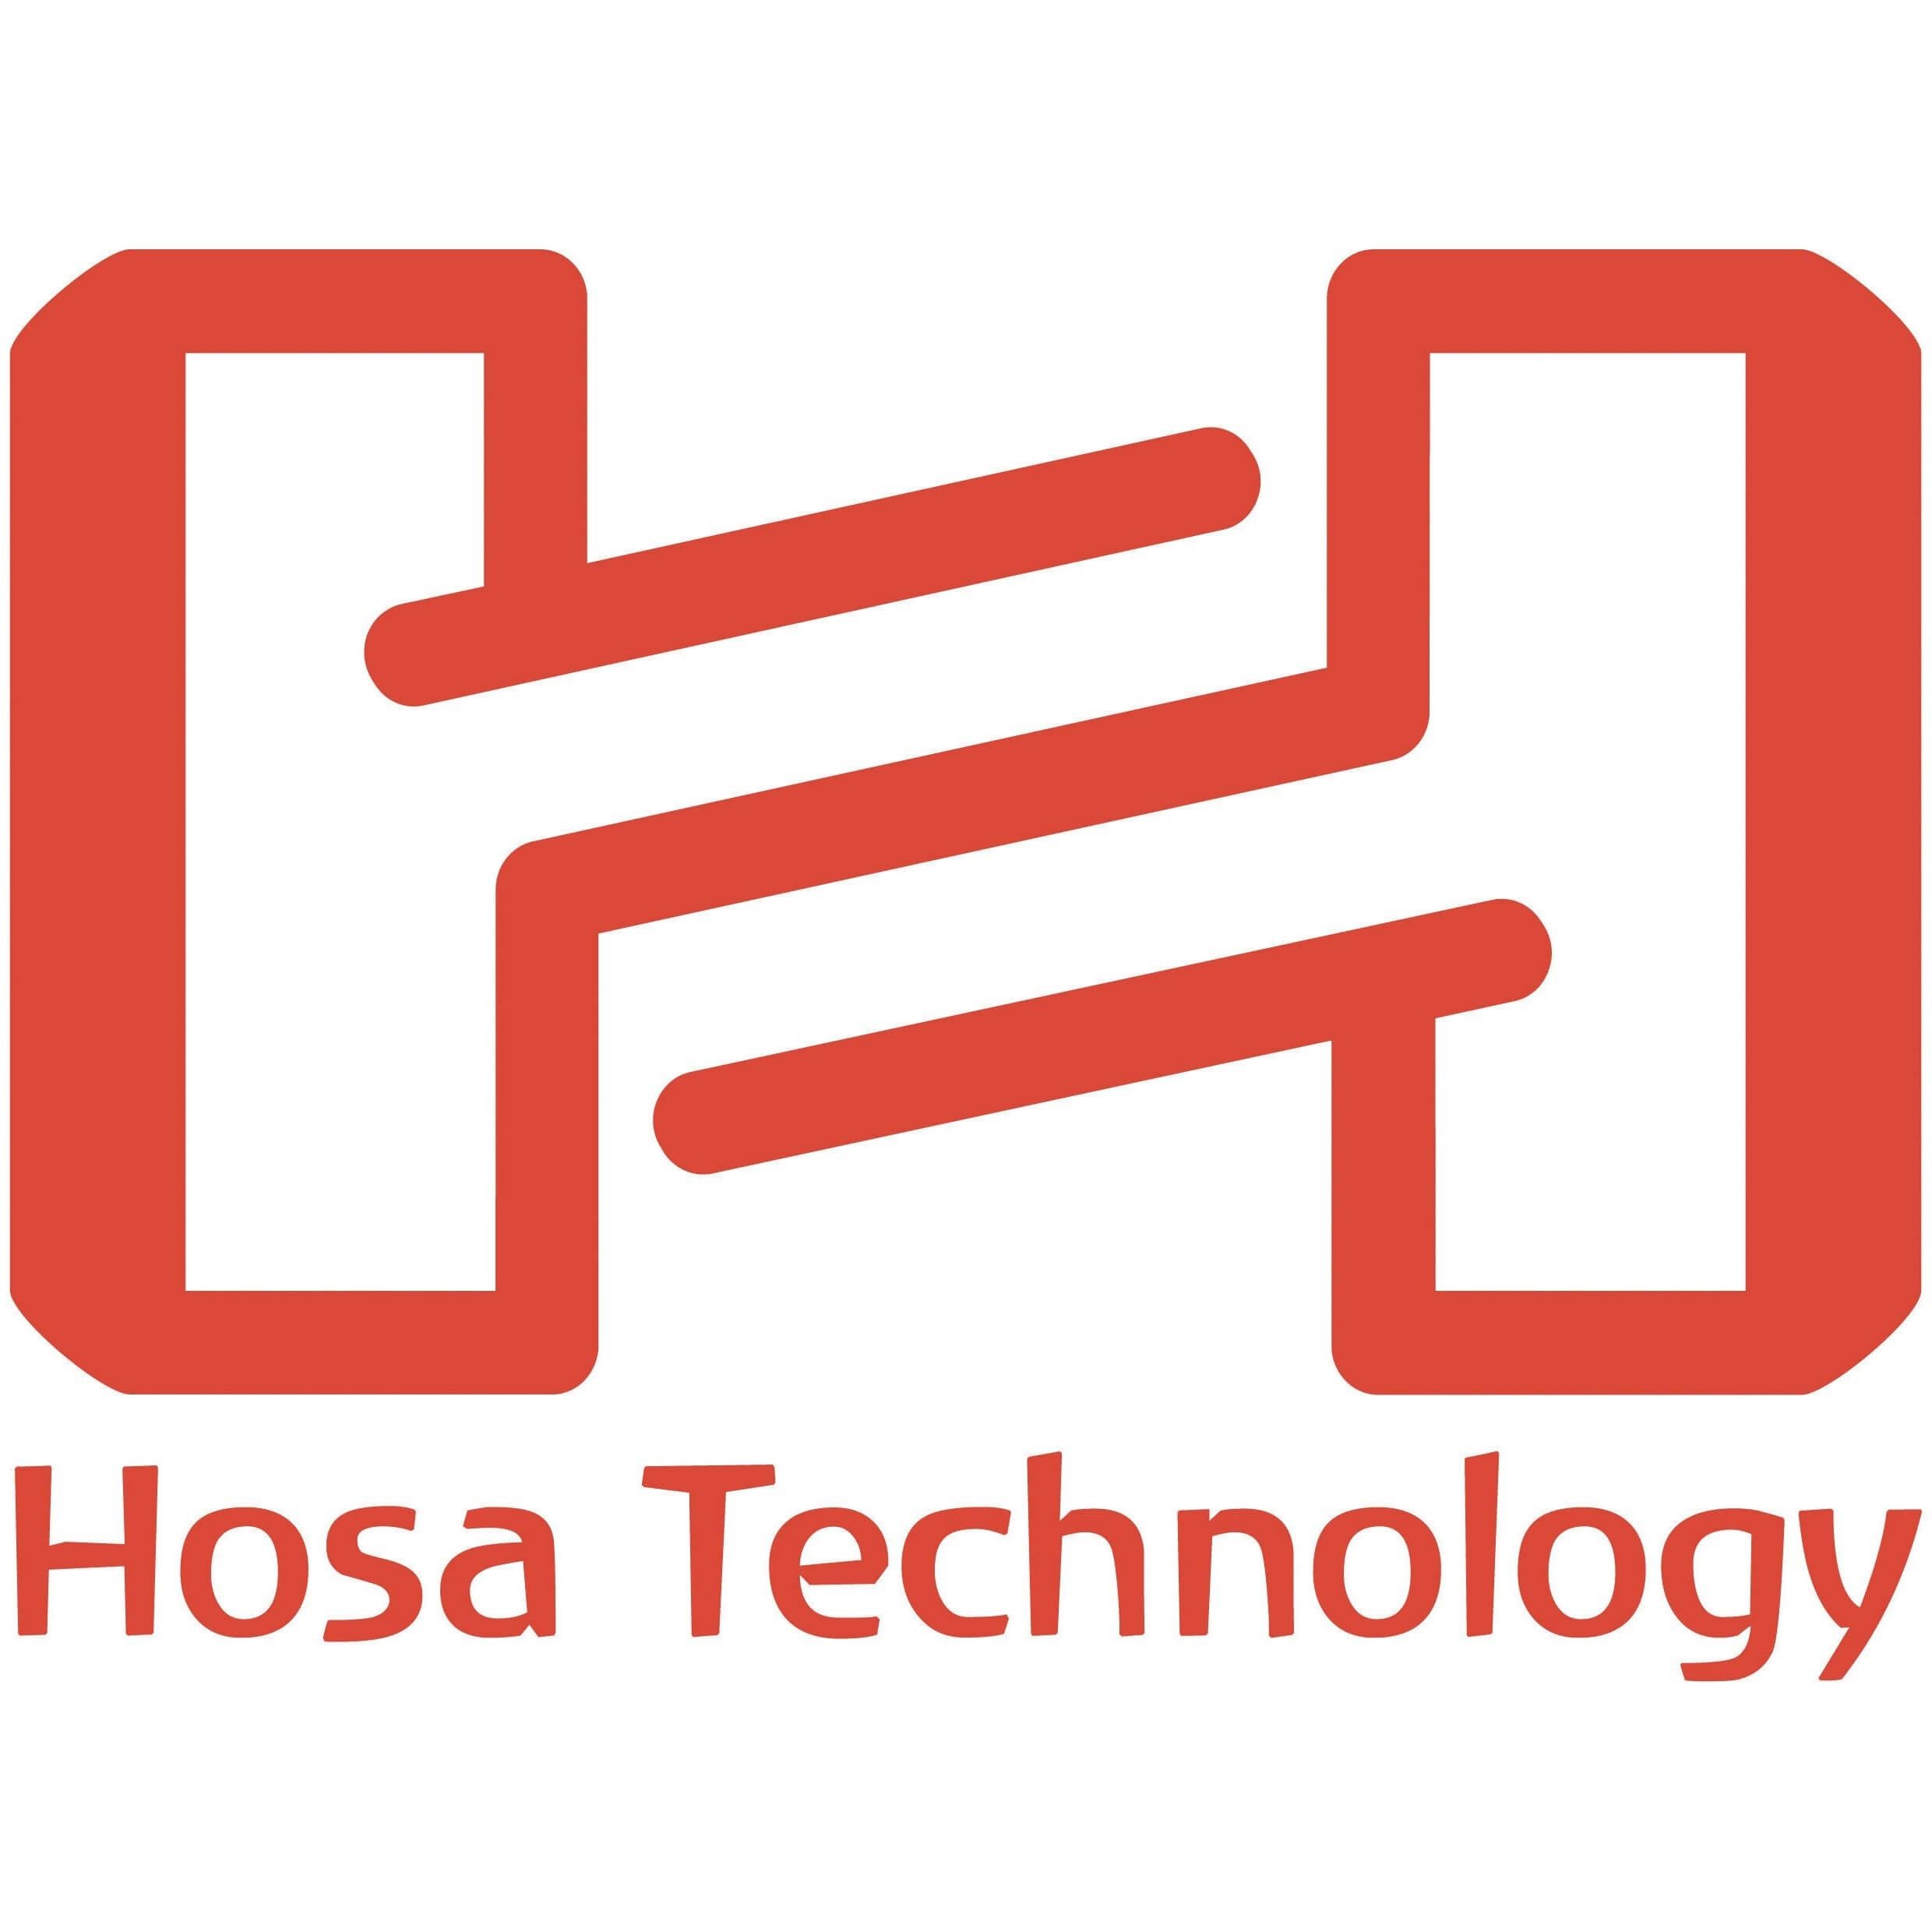 Hosa Technology